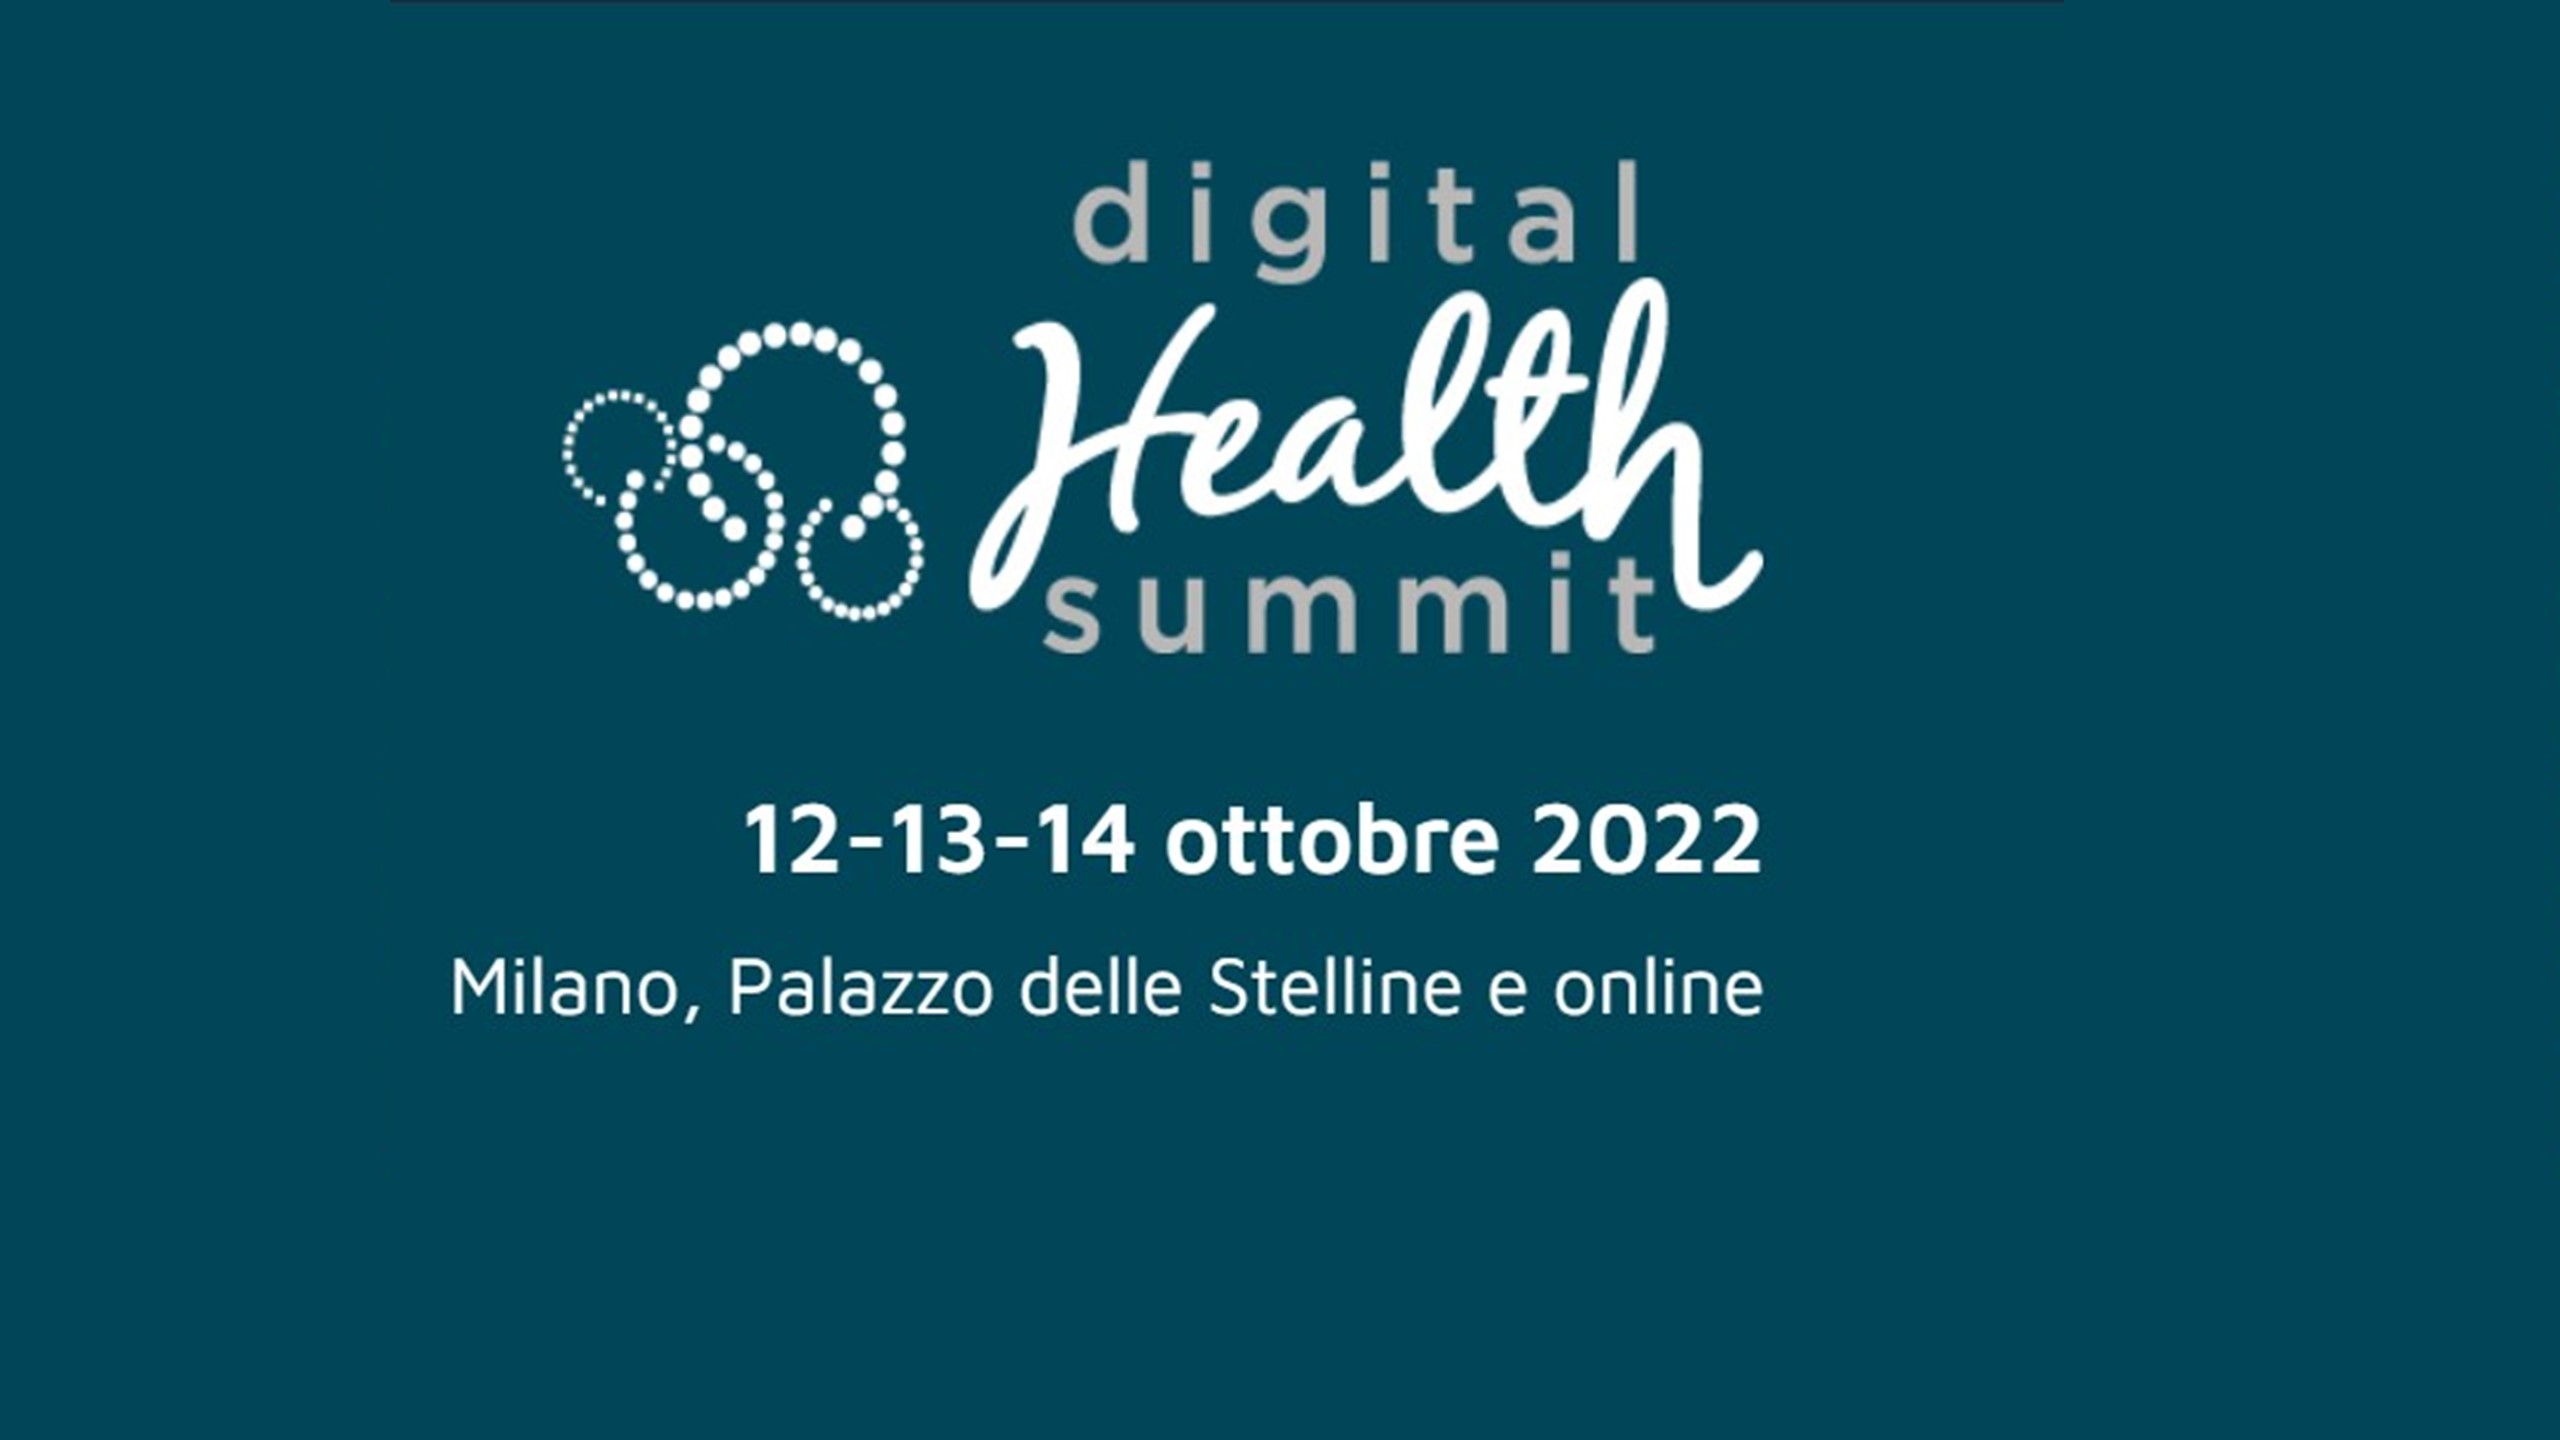 Digital Health Summit 2022 Featured Image